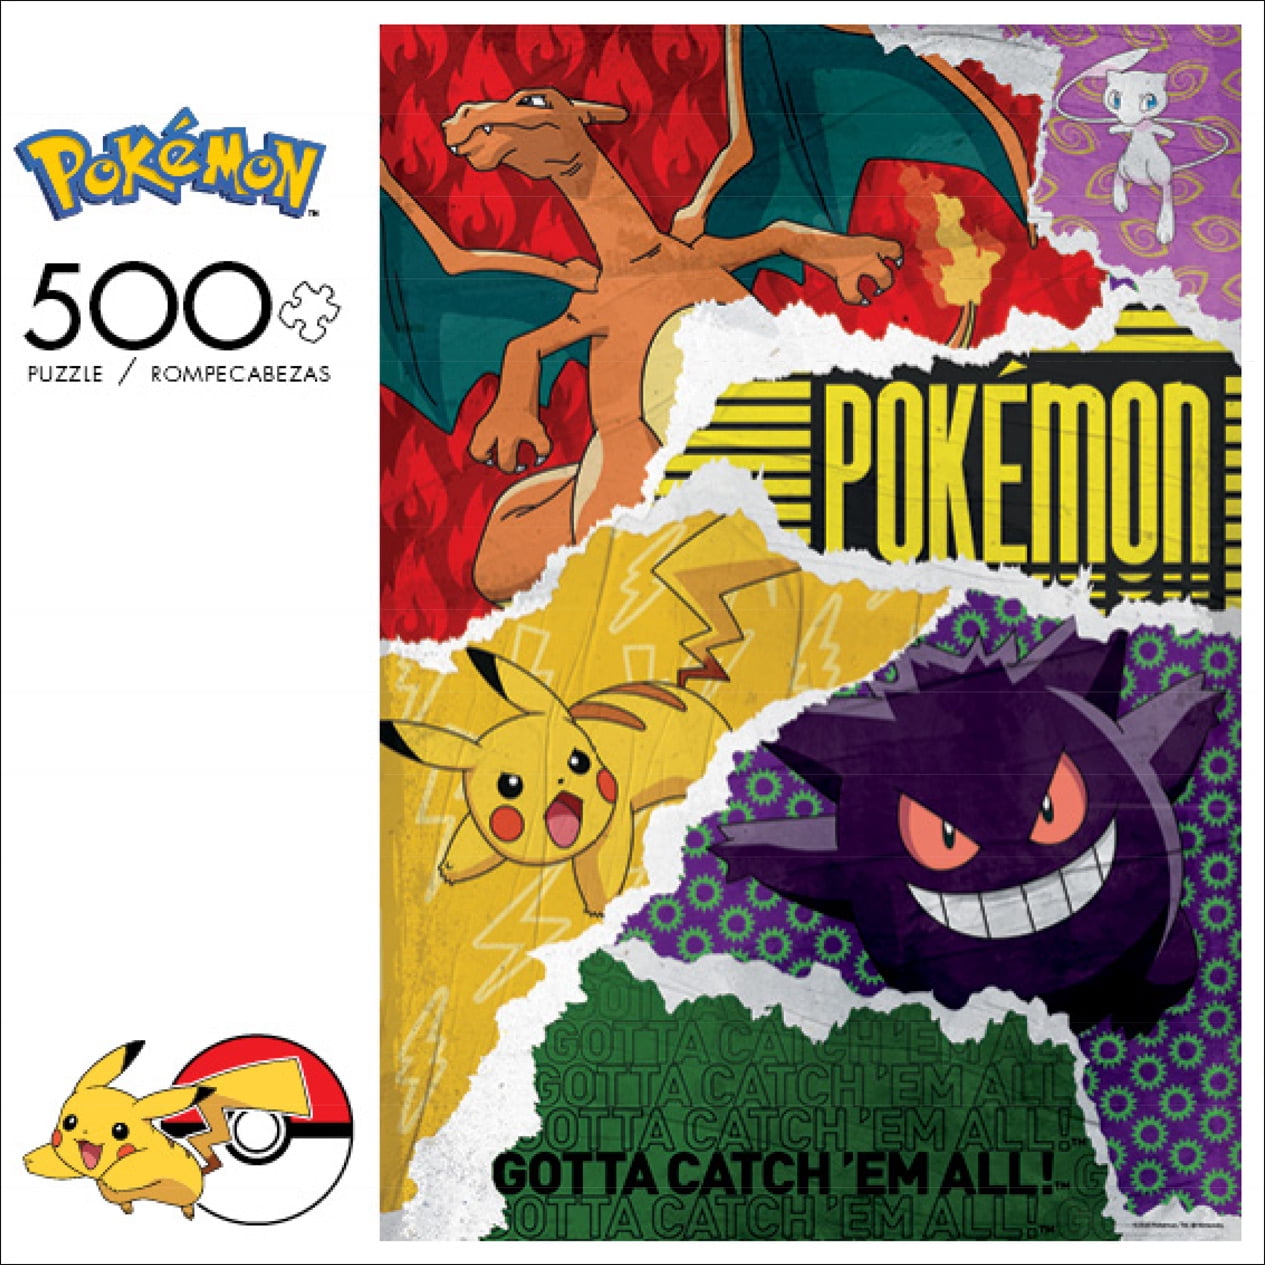 Pokemon Foil Collage, 500 Pieces, Buffalo Games